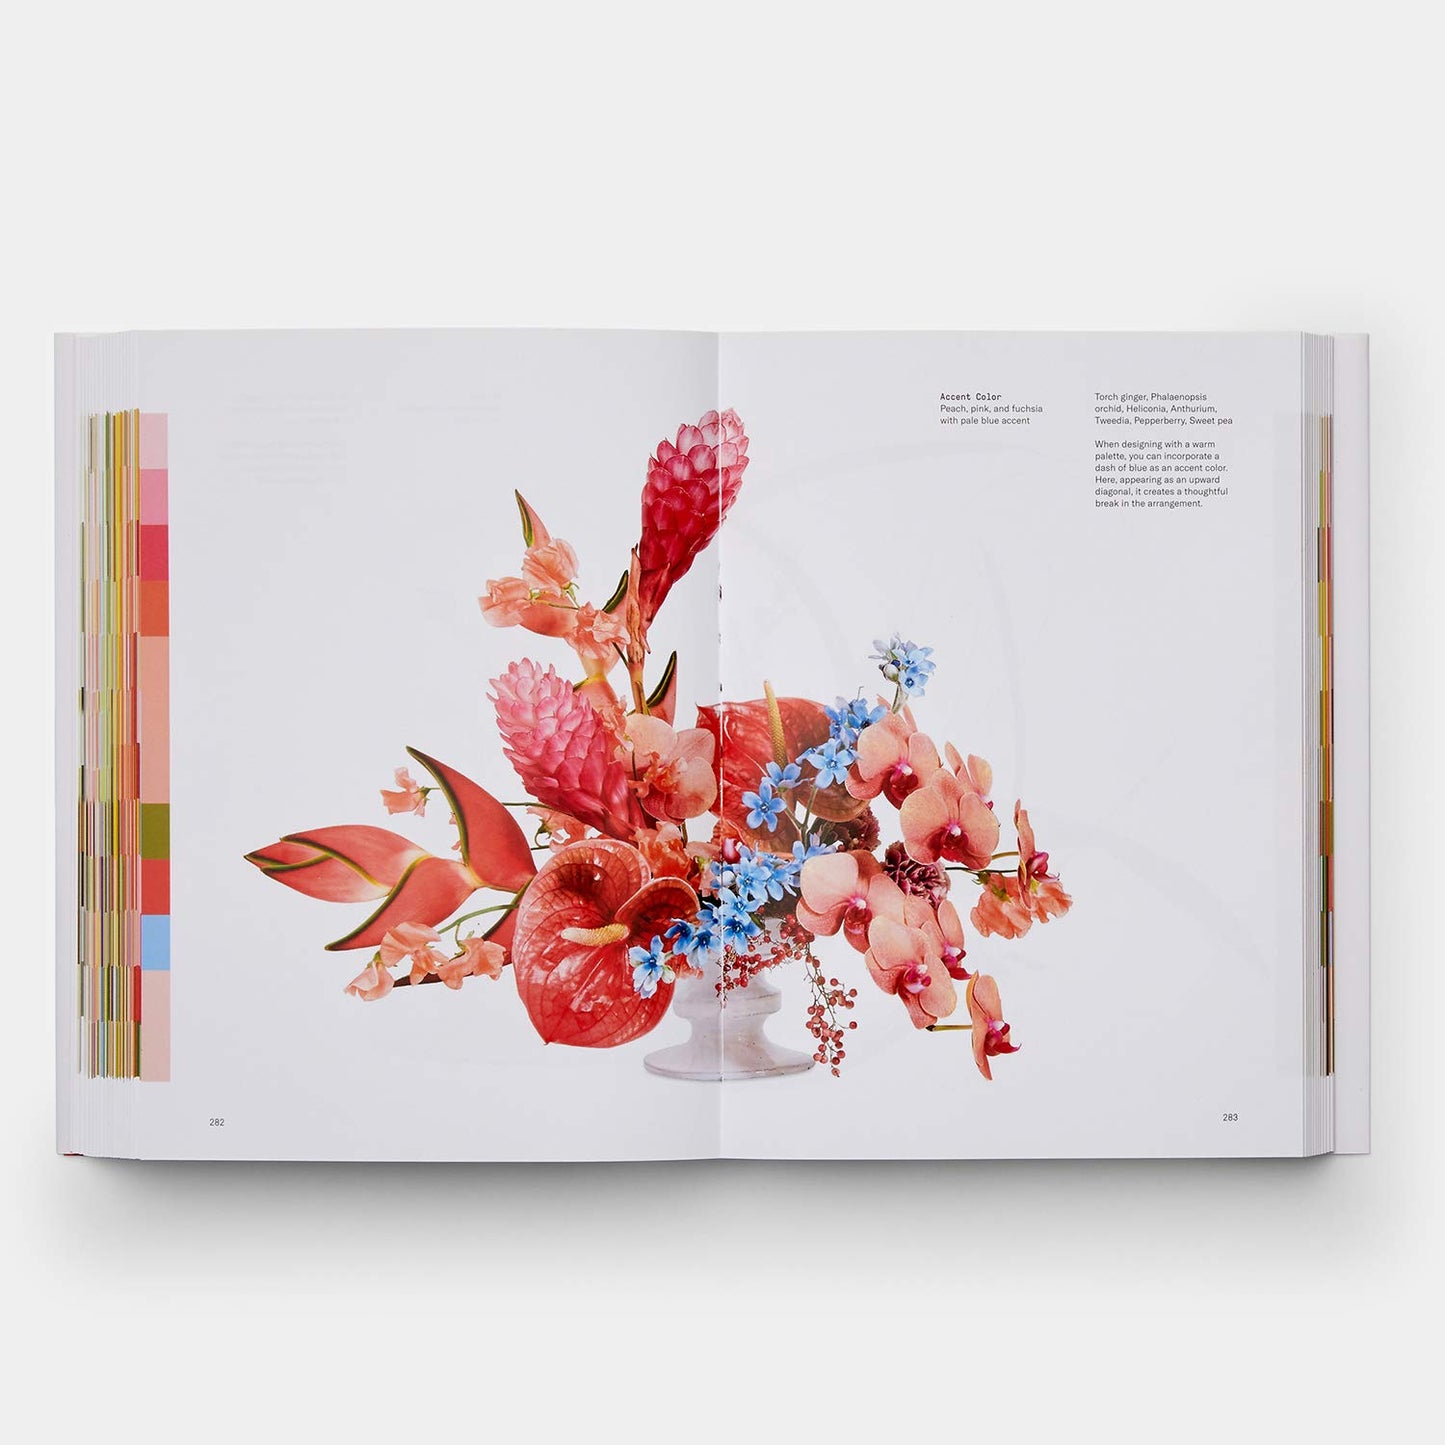 Book - Flower Color Theory by Darroch Putnam